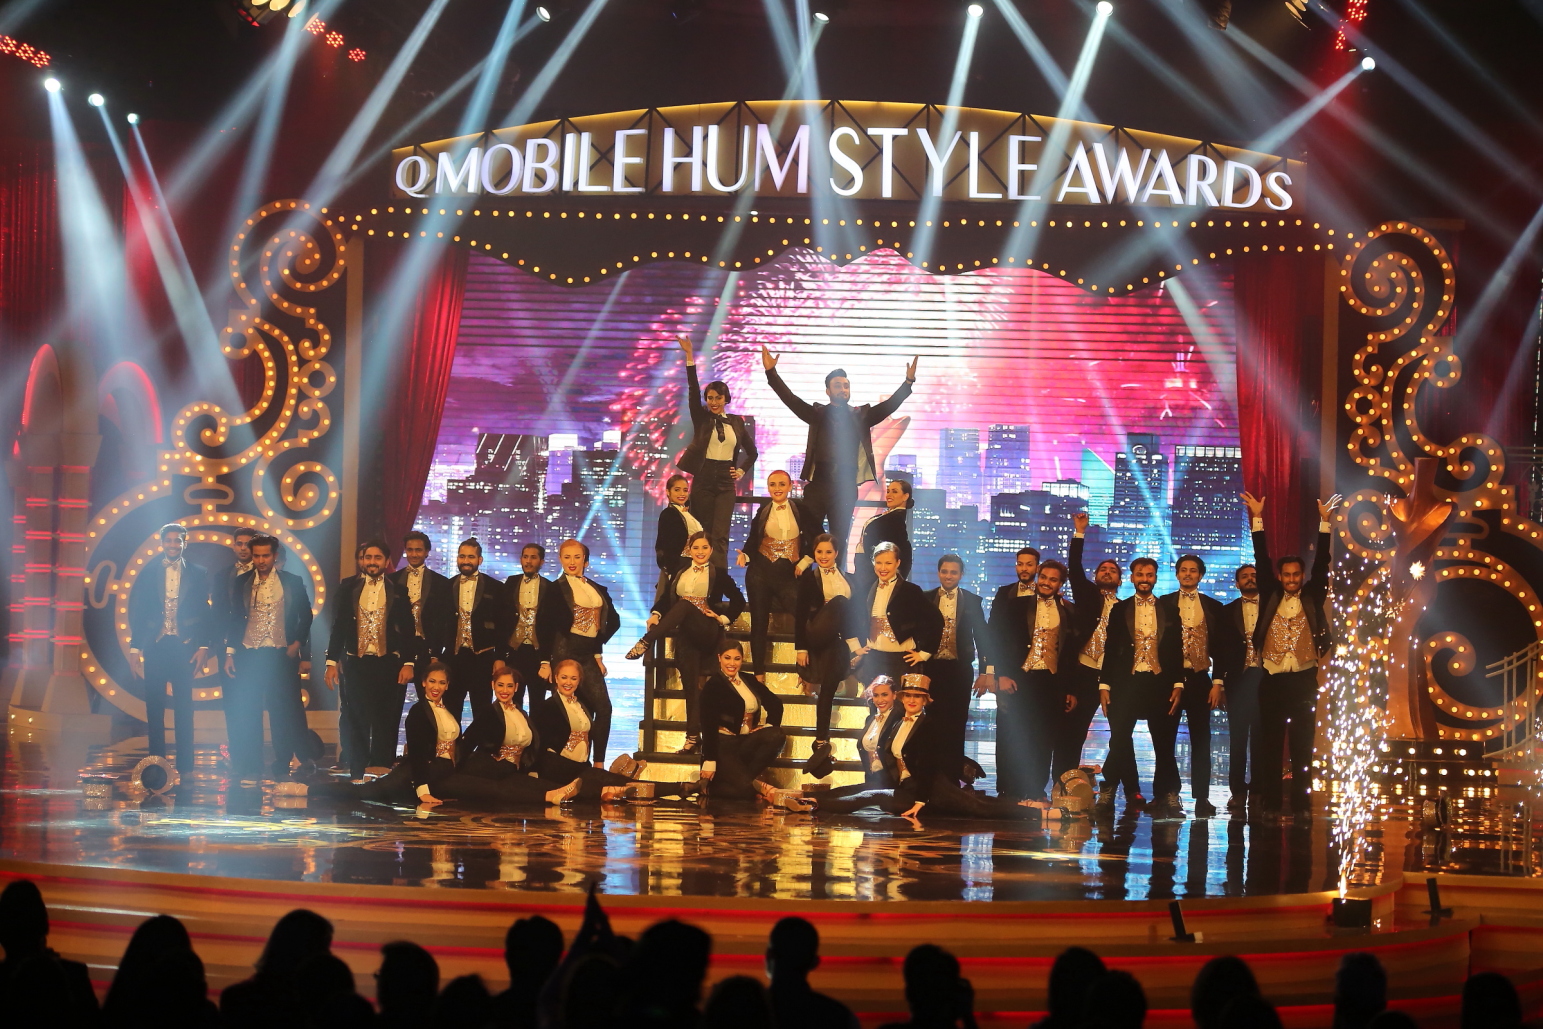 Hum Style Awards Newsline